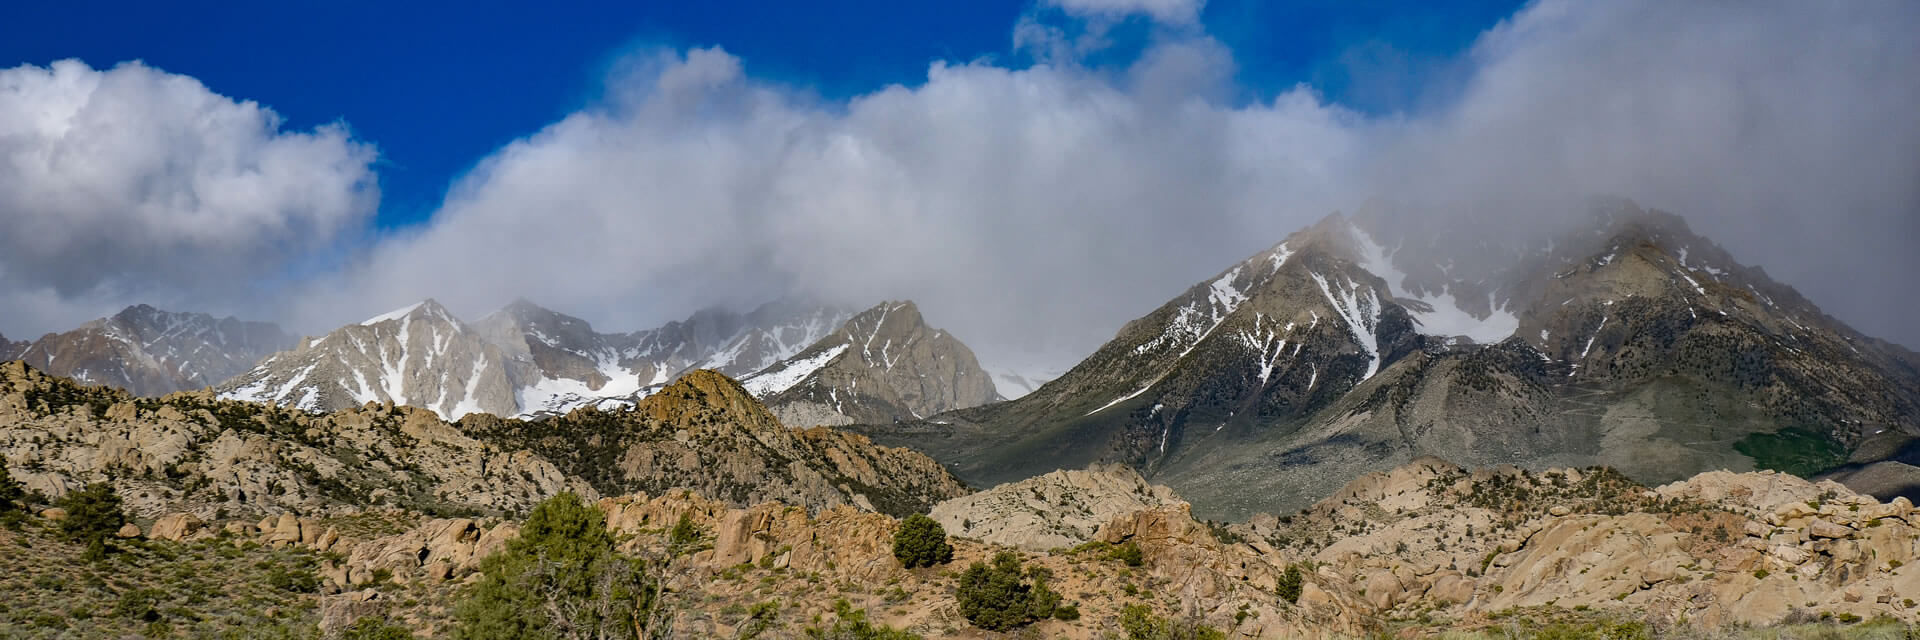 Clouds rolling through a Sierra mountain pass